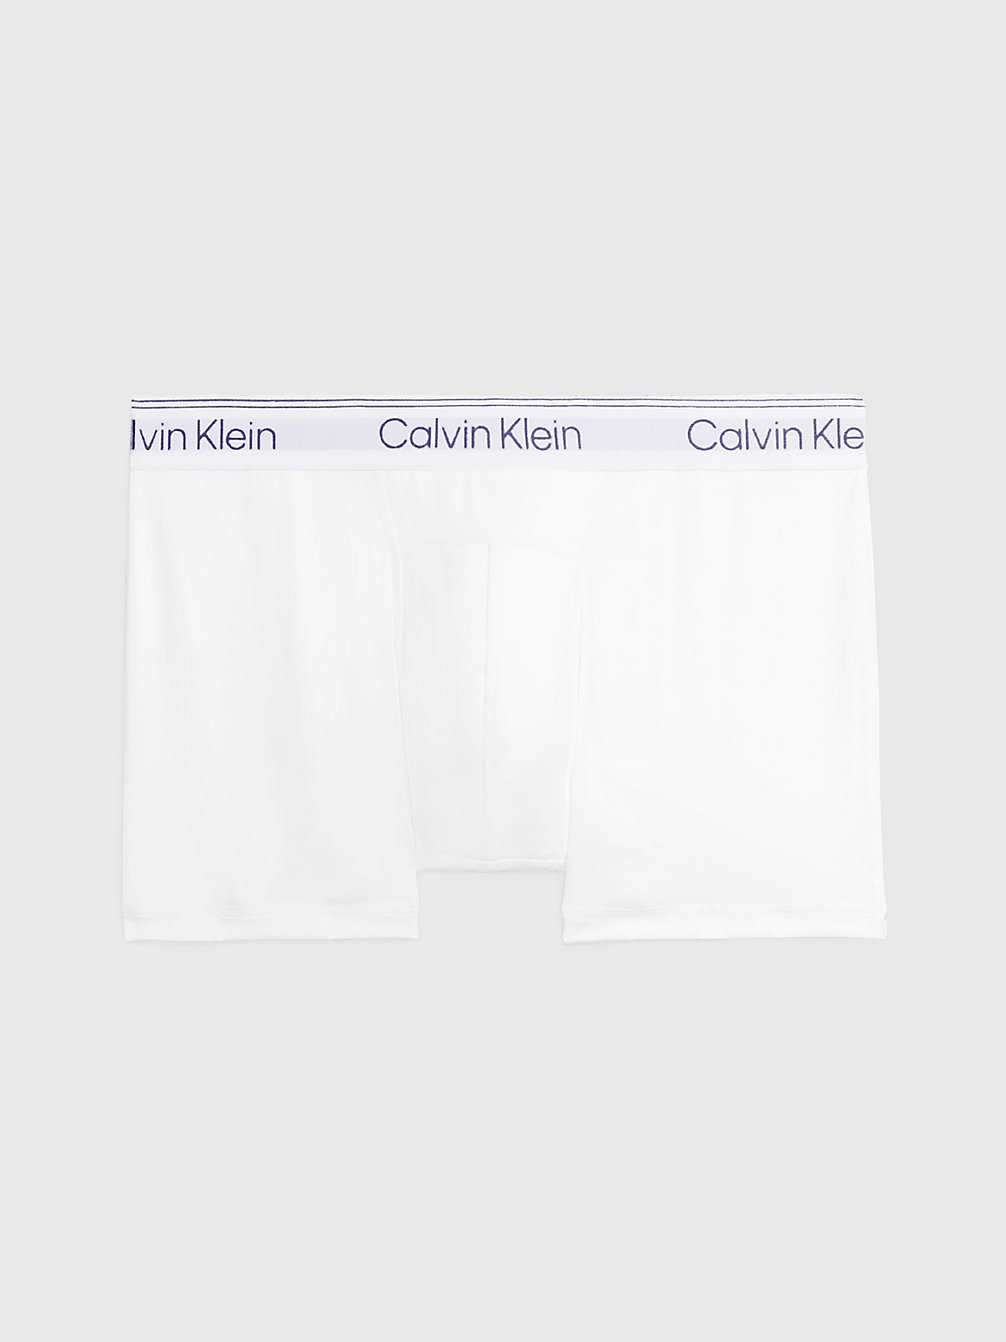 Bóxers - Athletic Cotton > WHITE > undefined hombre > Calvin Klein